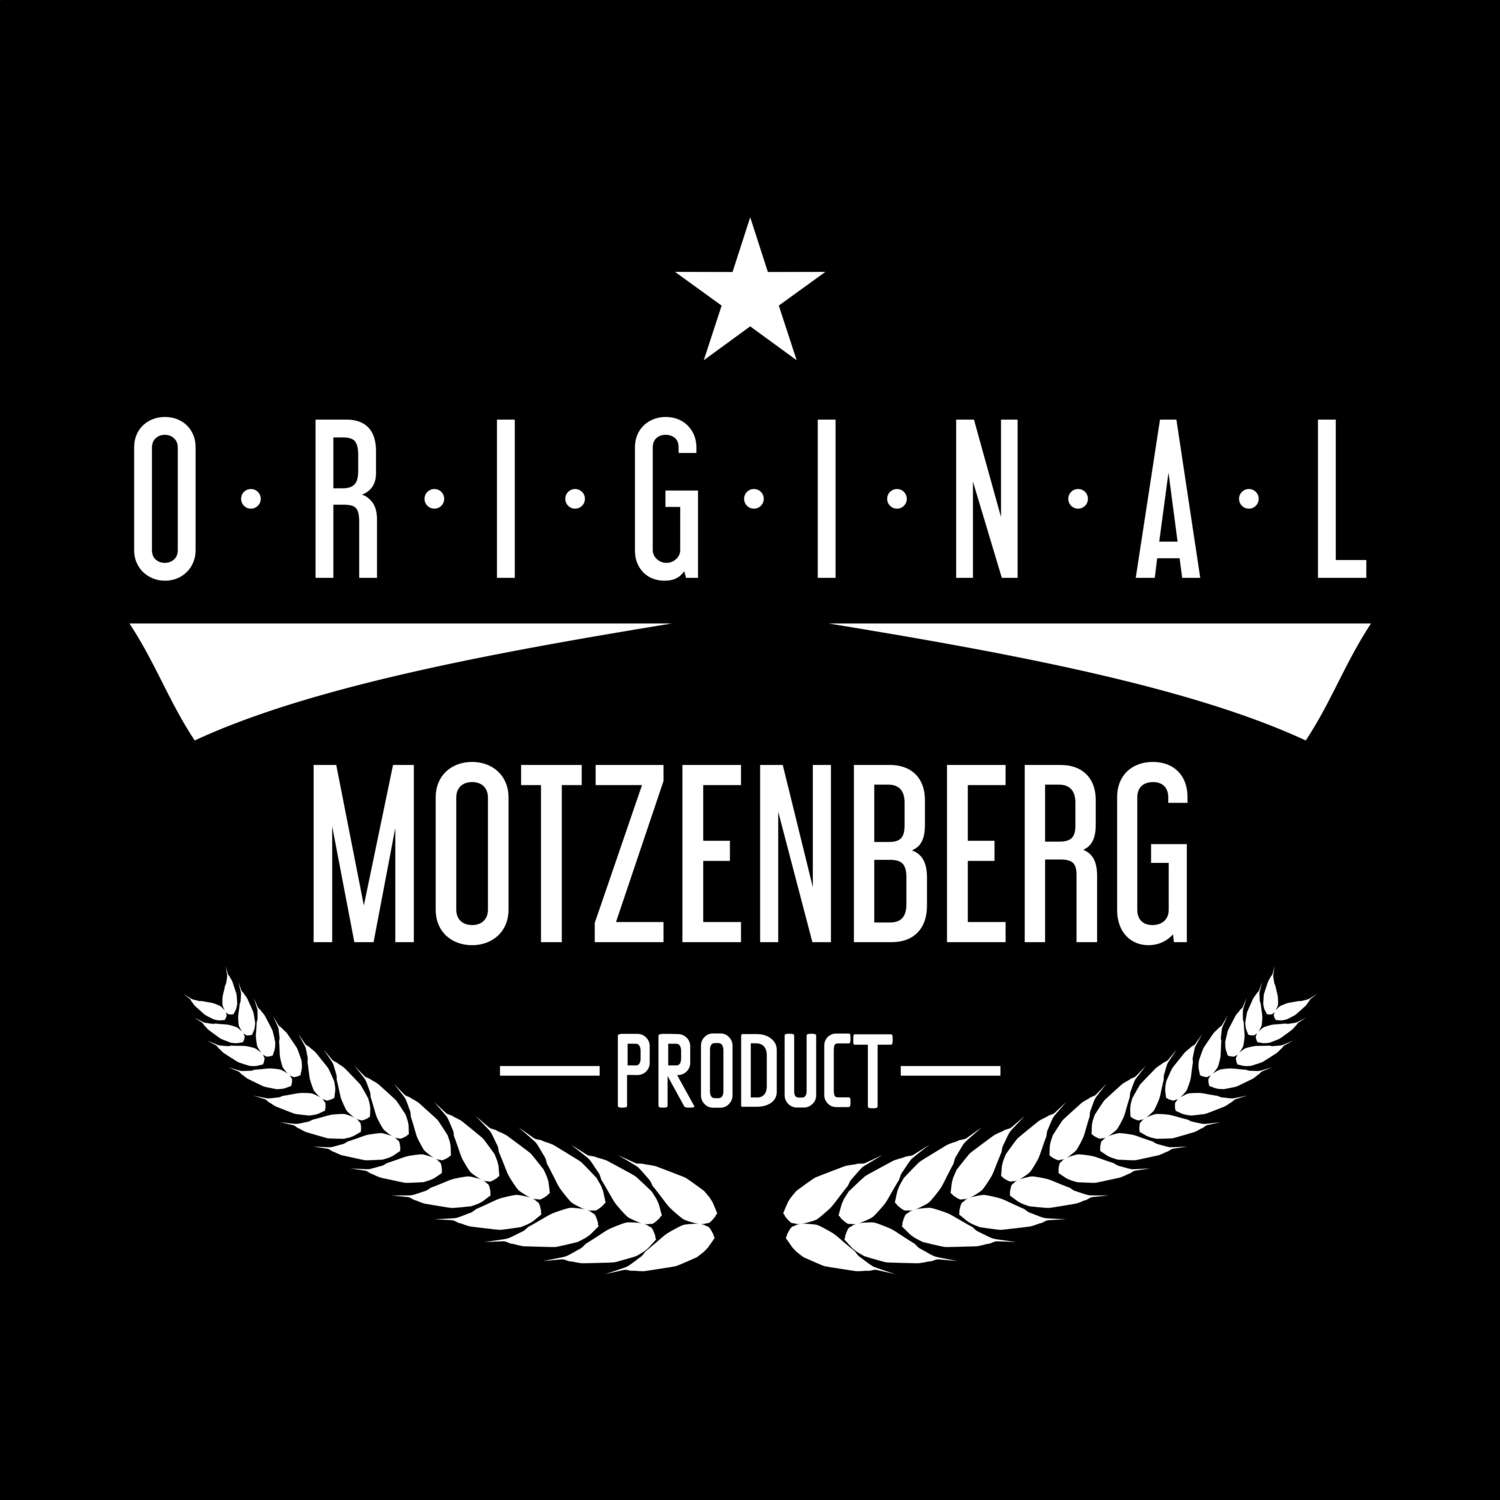 Motzenberg T-Shirt »Original Product«